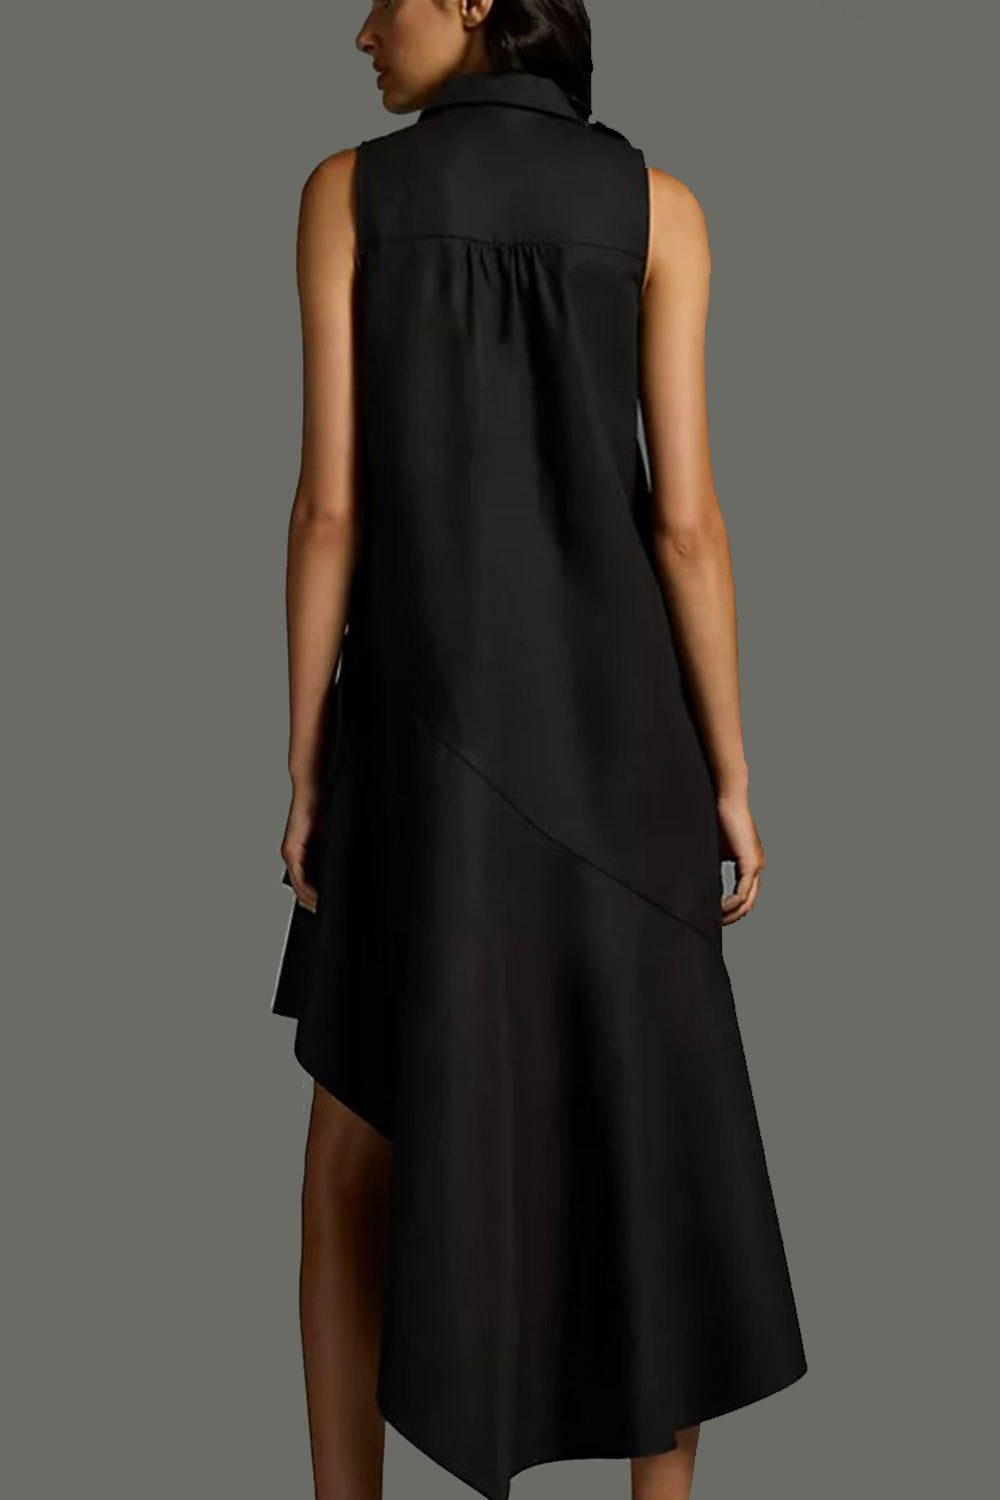 Opalescent Black Dress